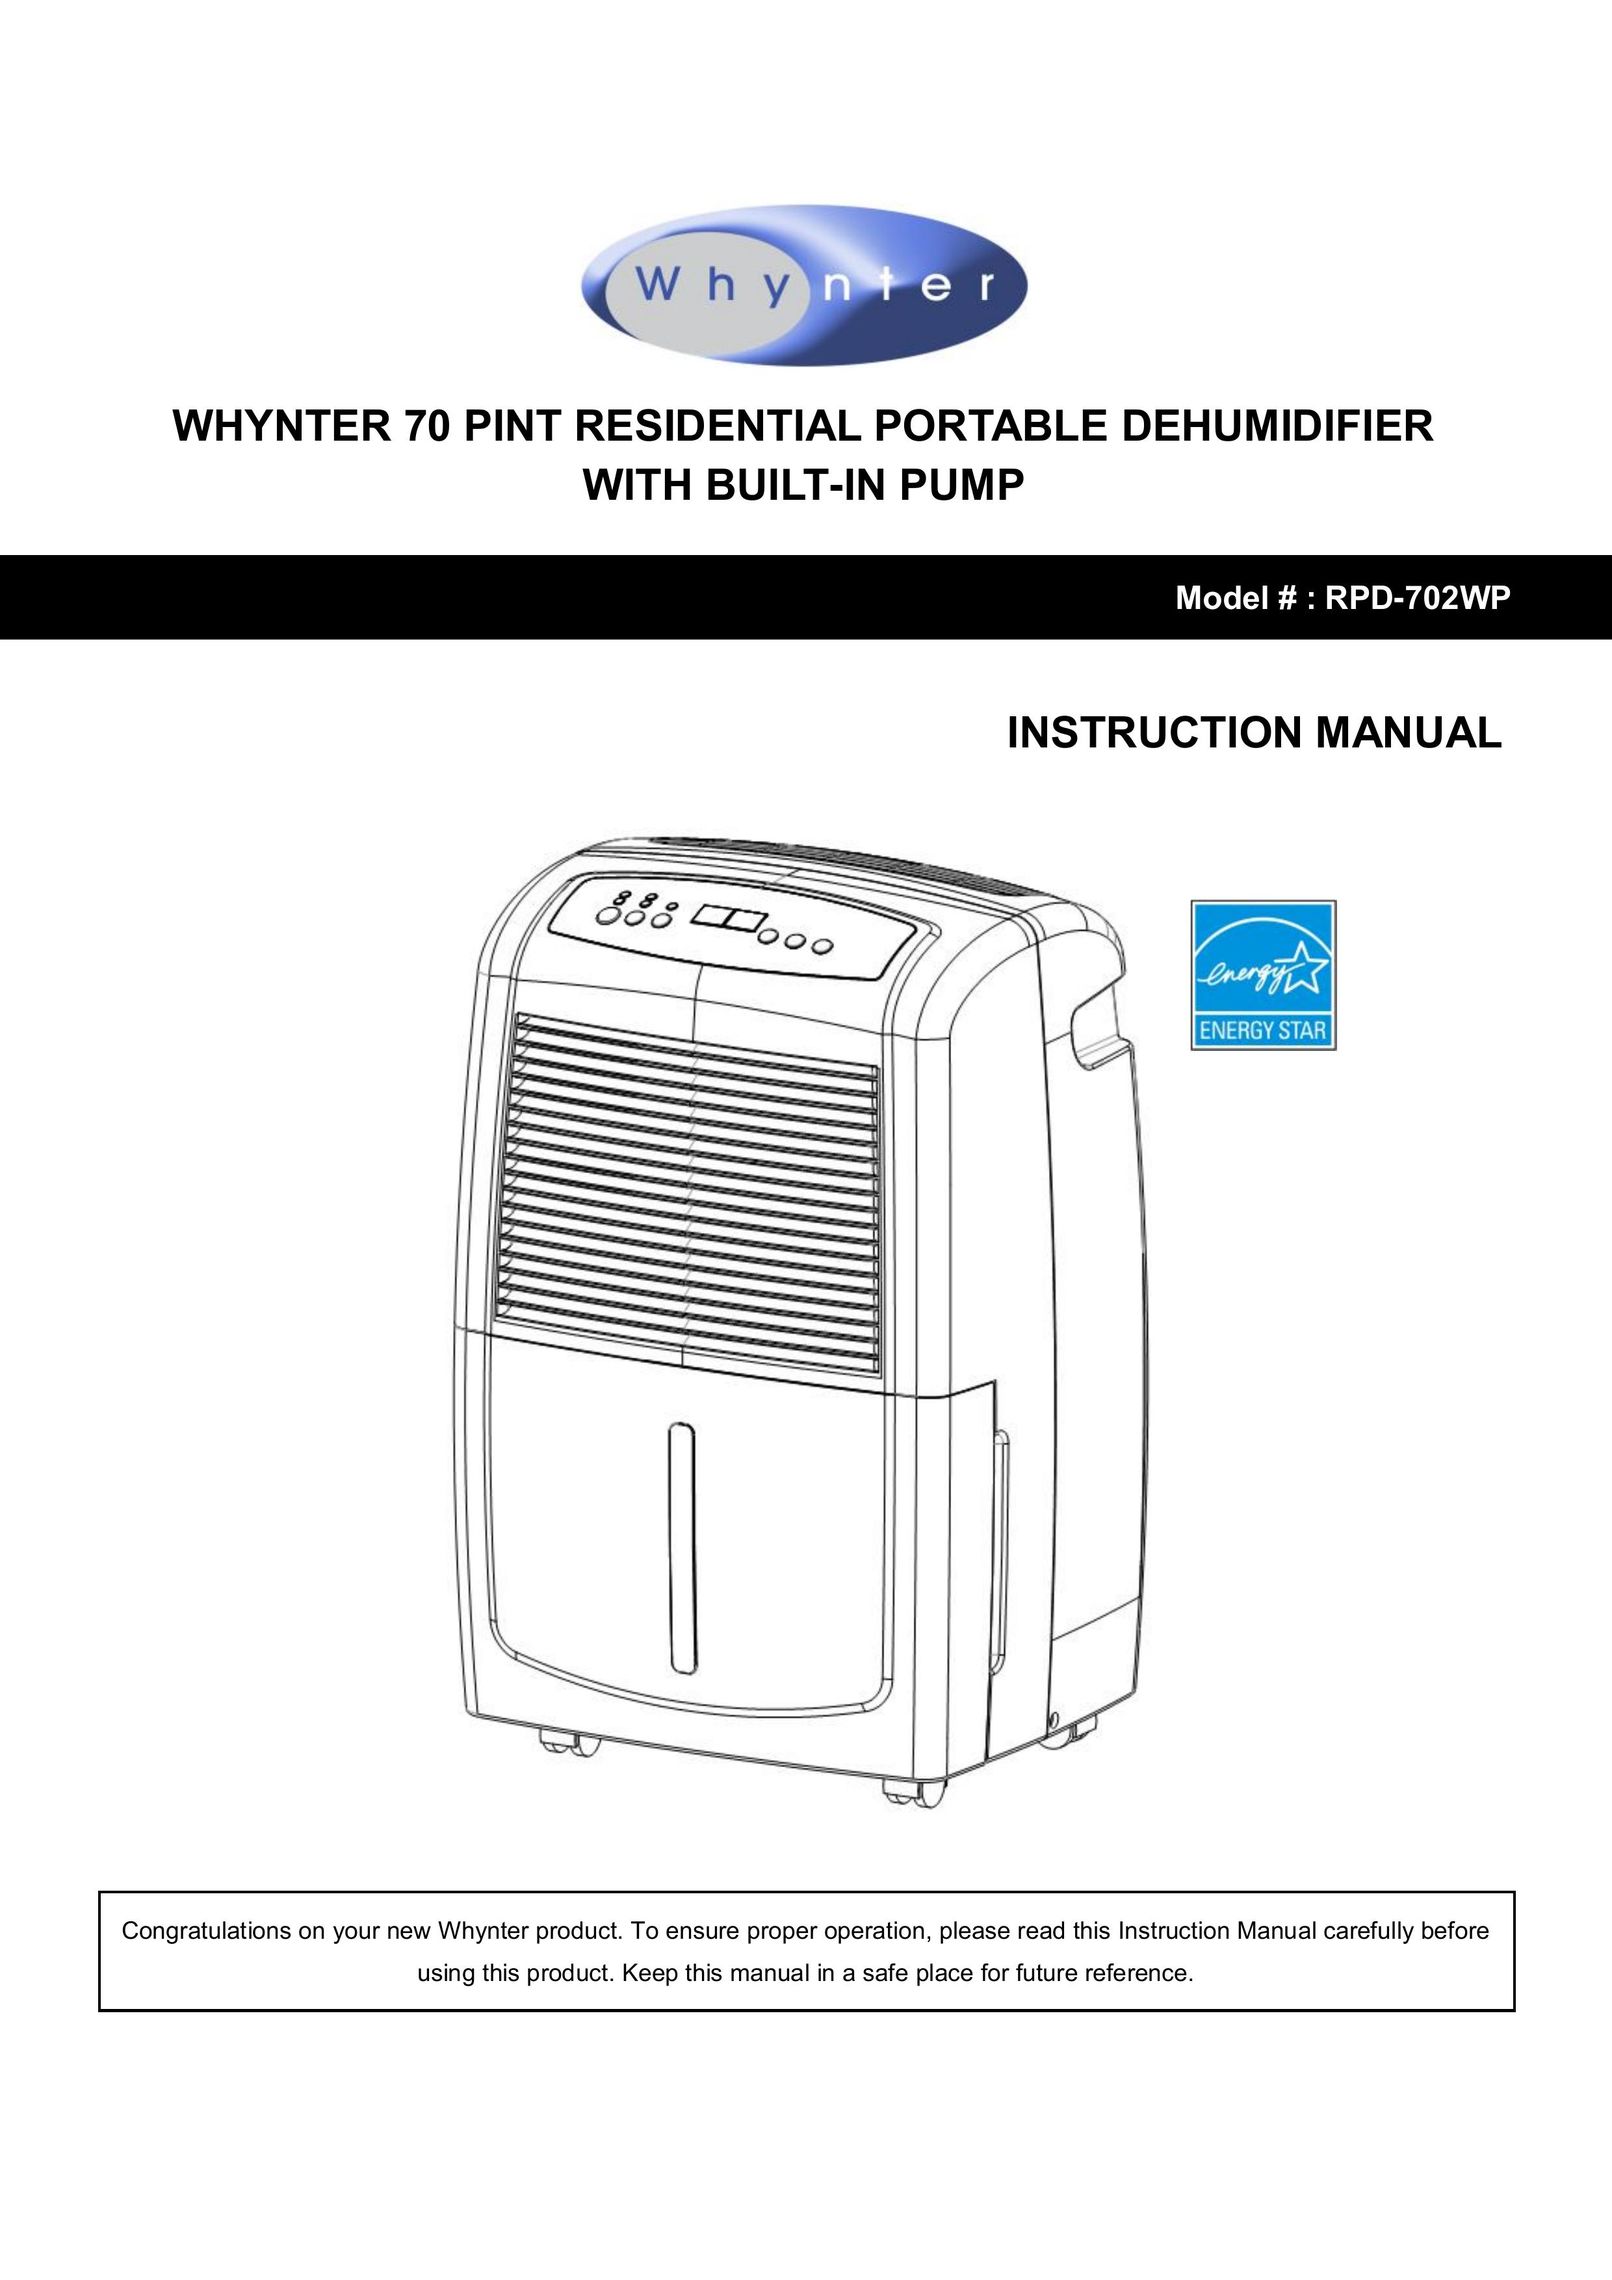 Whynter RPD-702WP Dehumidifier User Manual